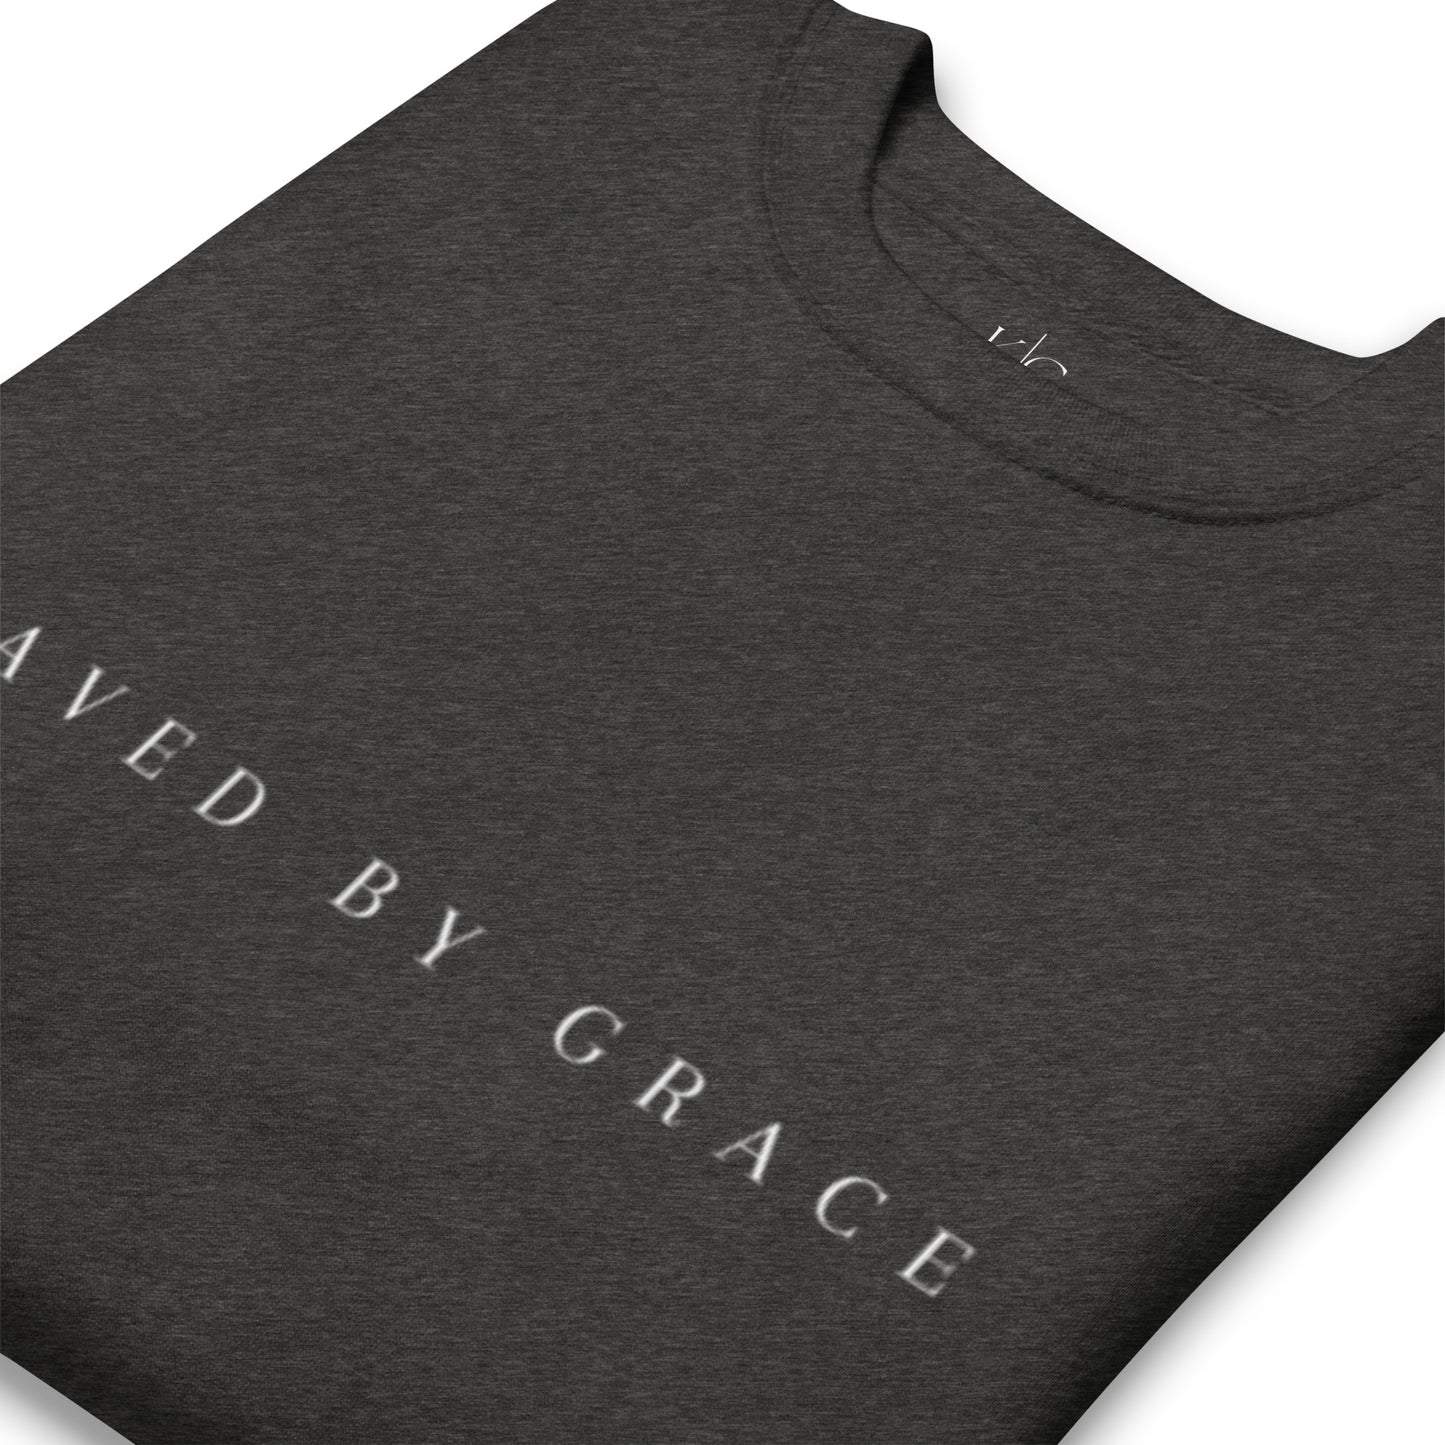 Saved By Grace Premium Sweatshirt